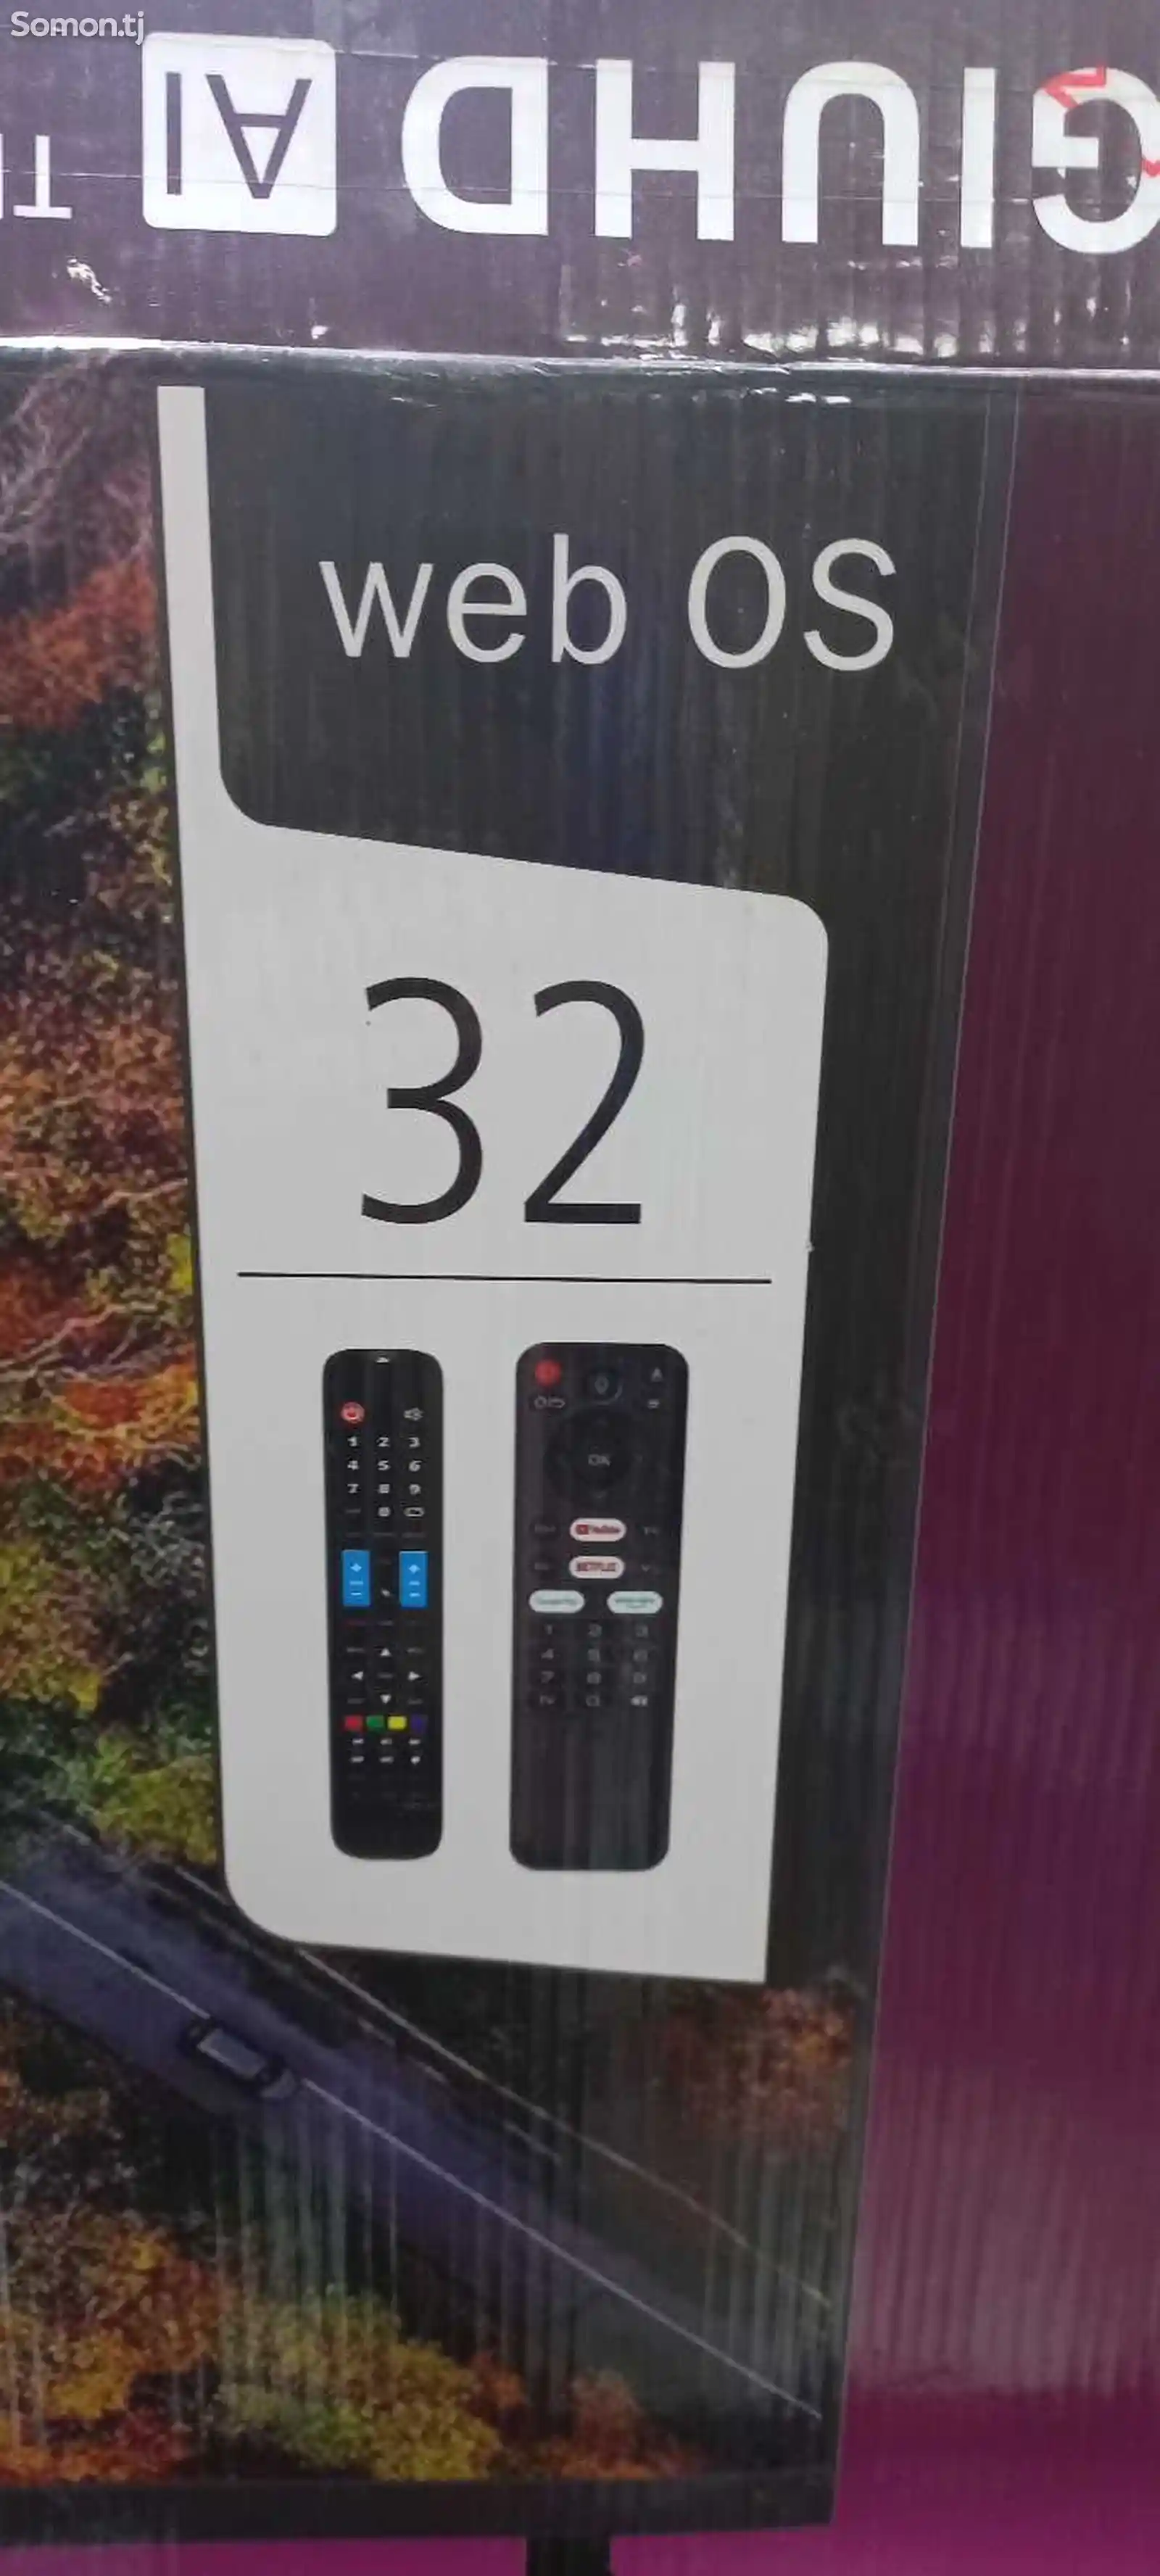 Телевизор LG 32 webos, Дубай-2